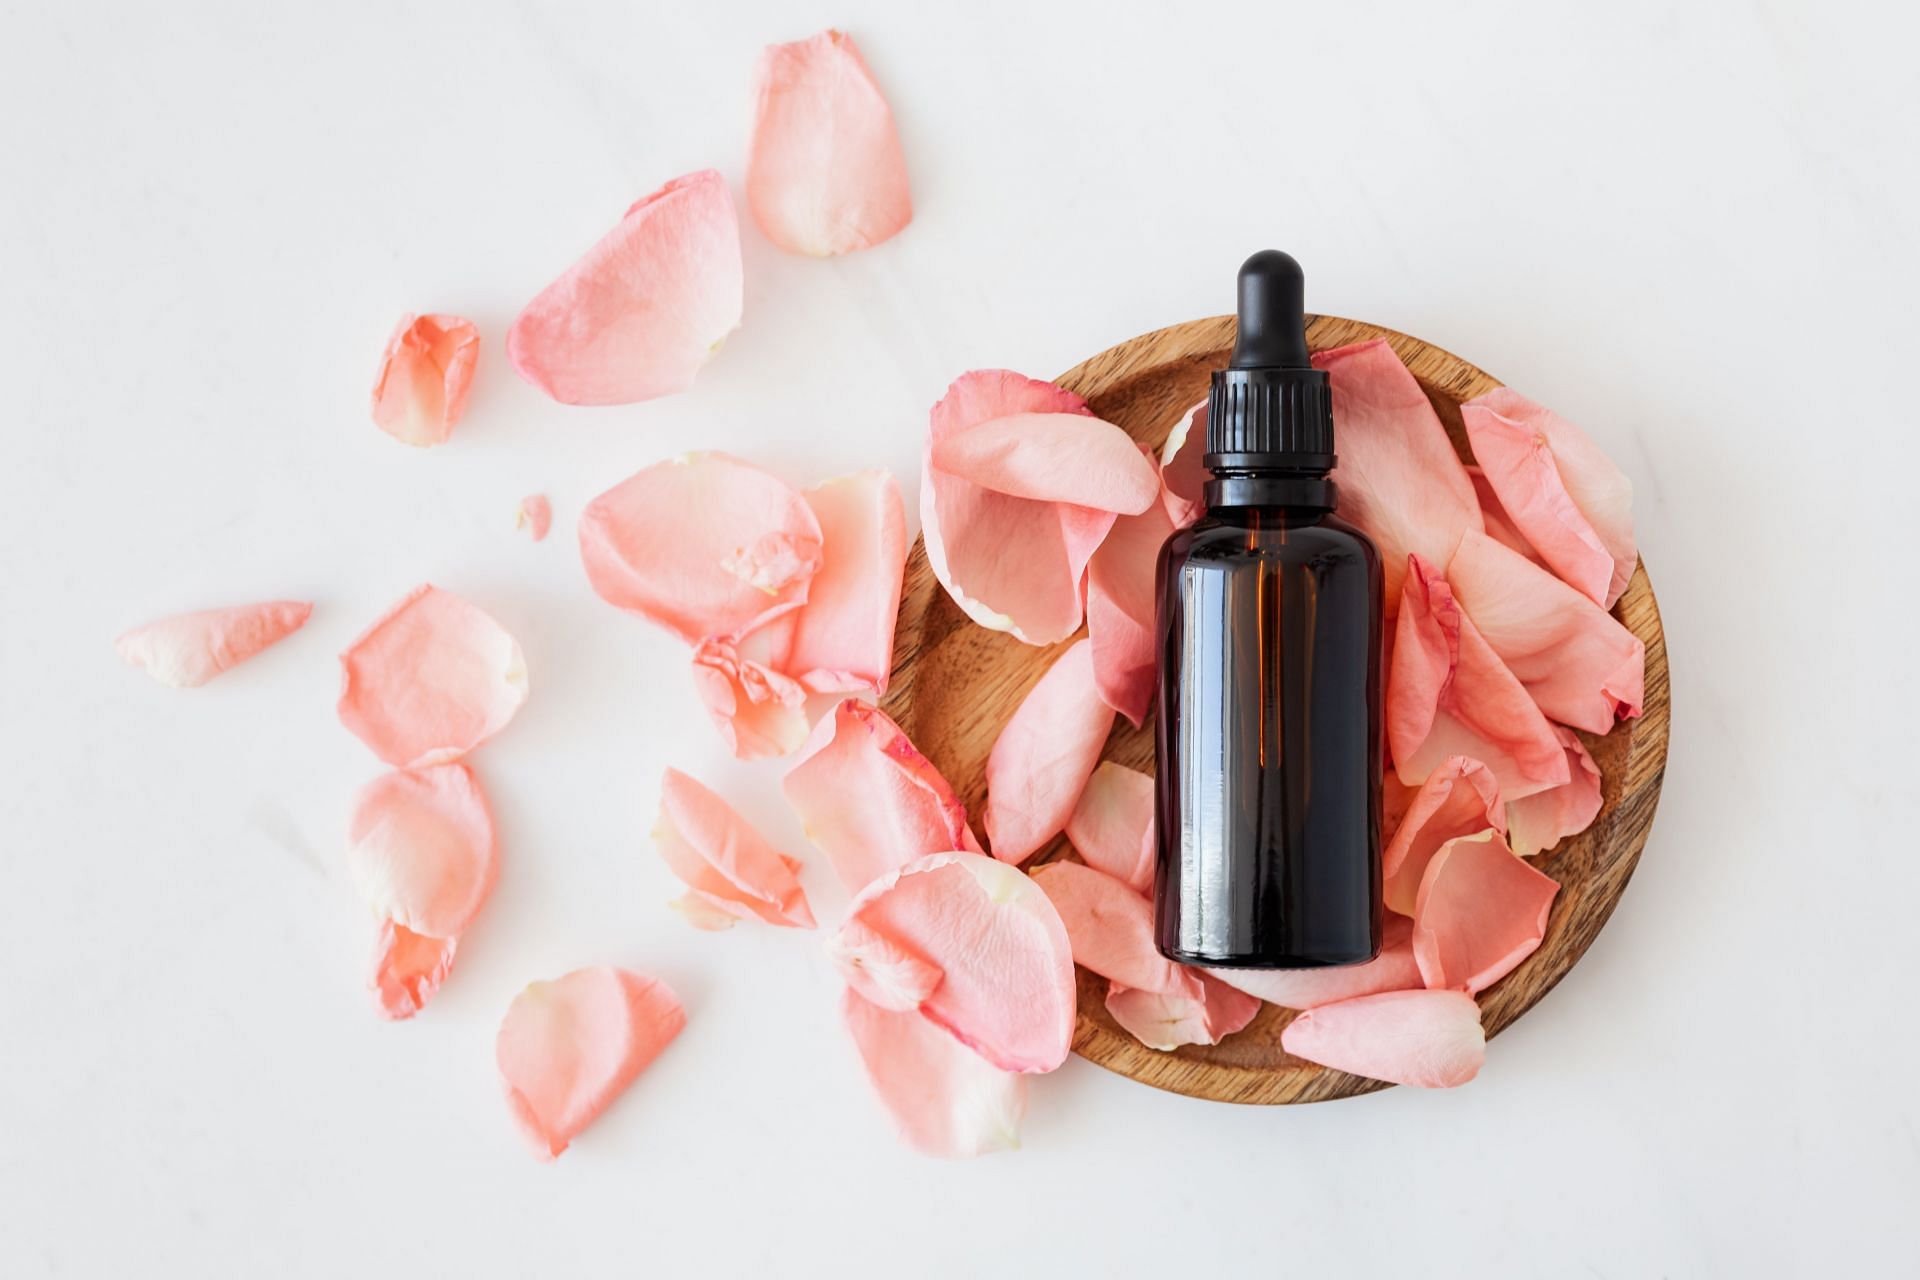 Tea tree oil uses for skin helps prevent acne. (Image via Pexels/ Karolina Grabowska)